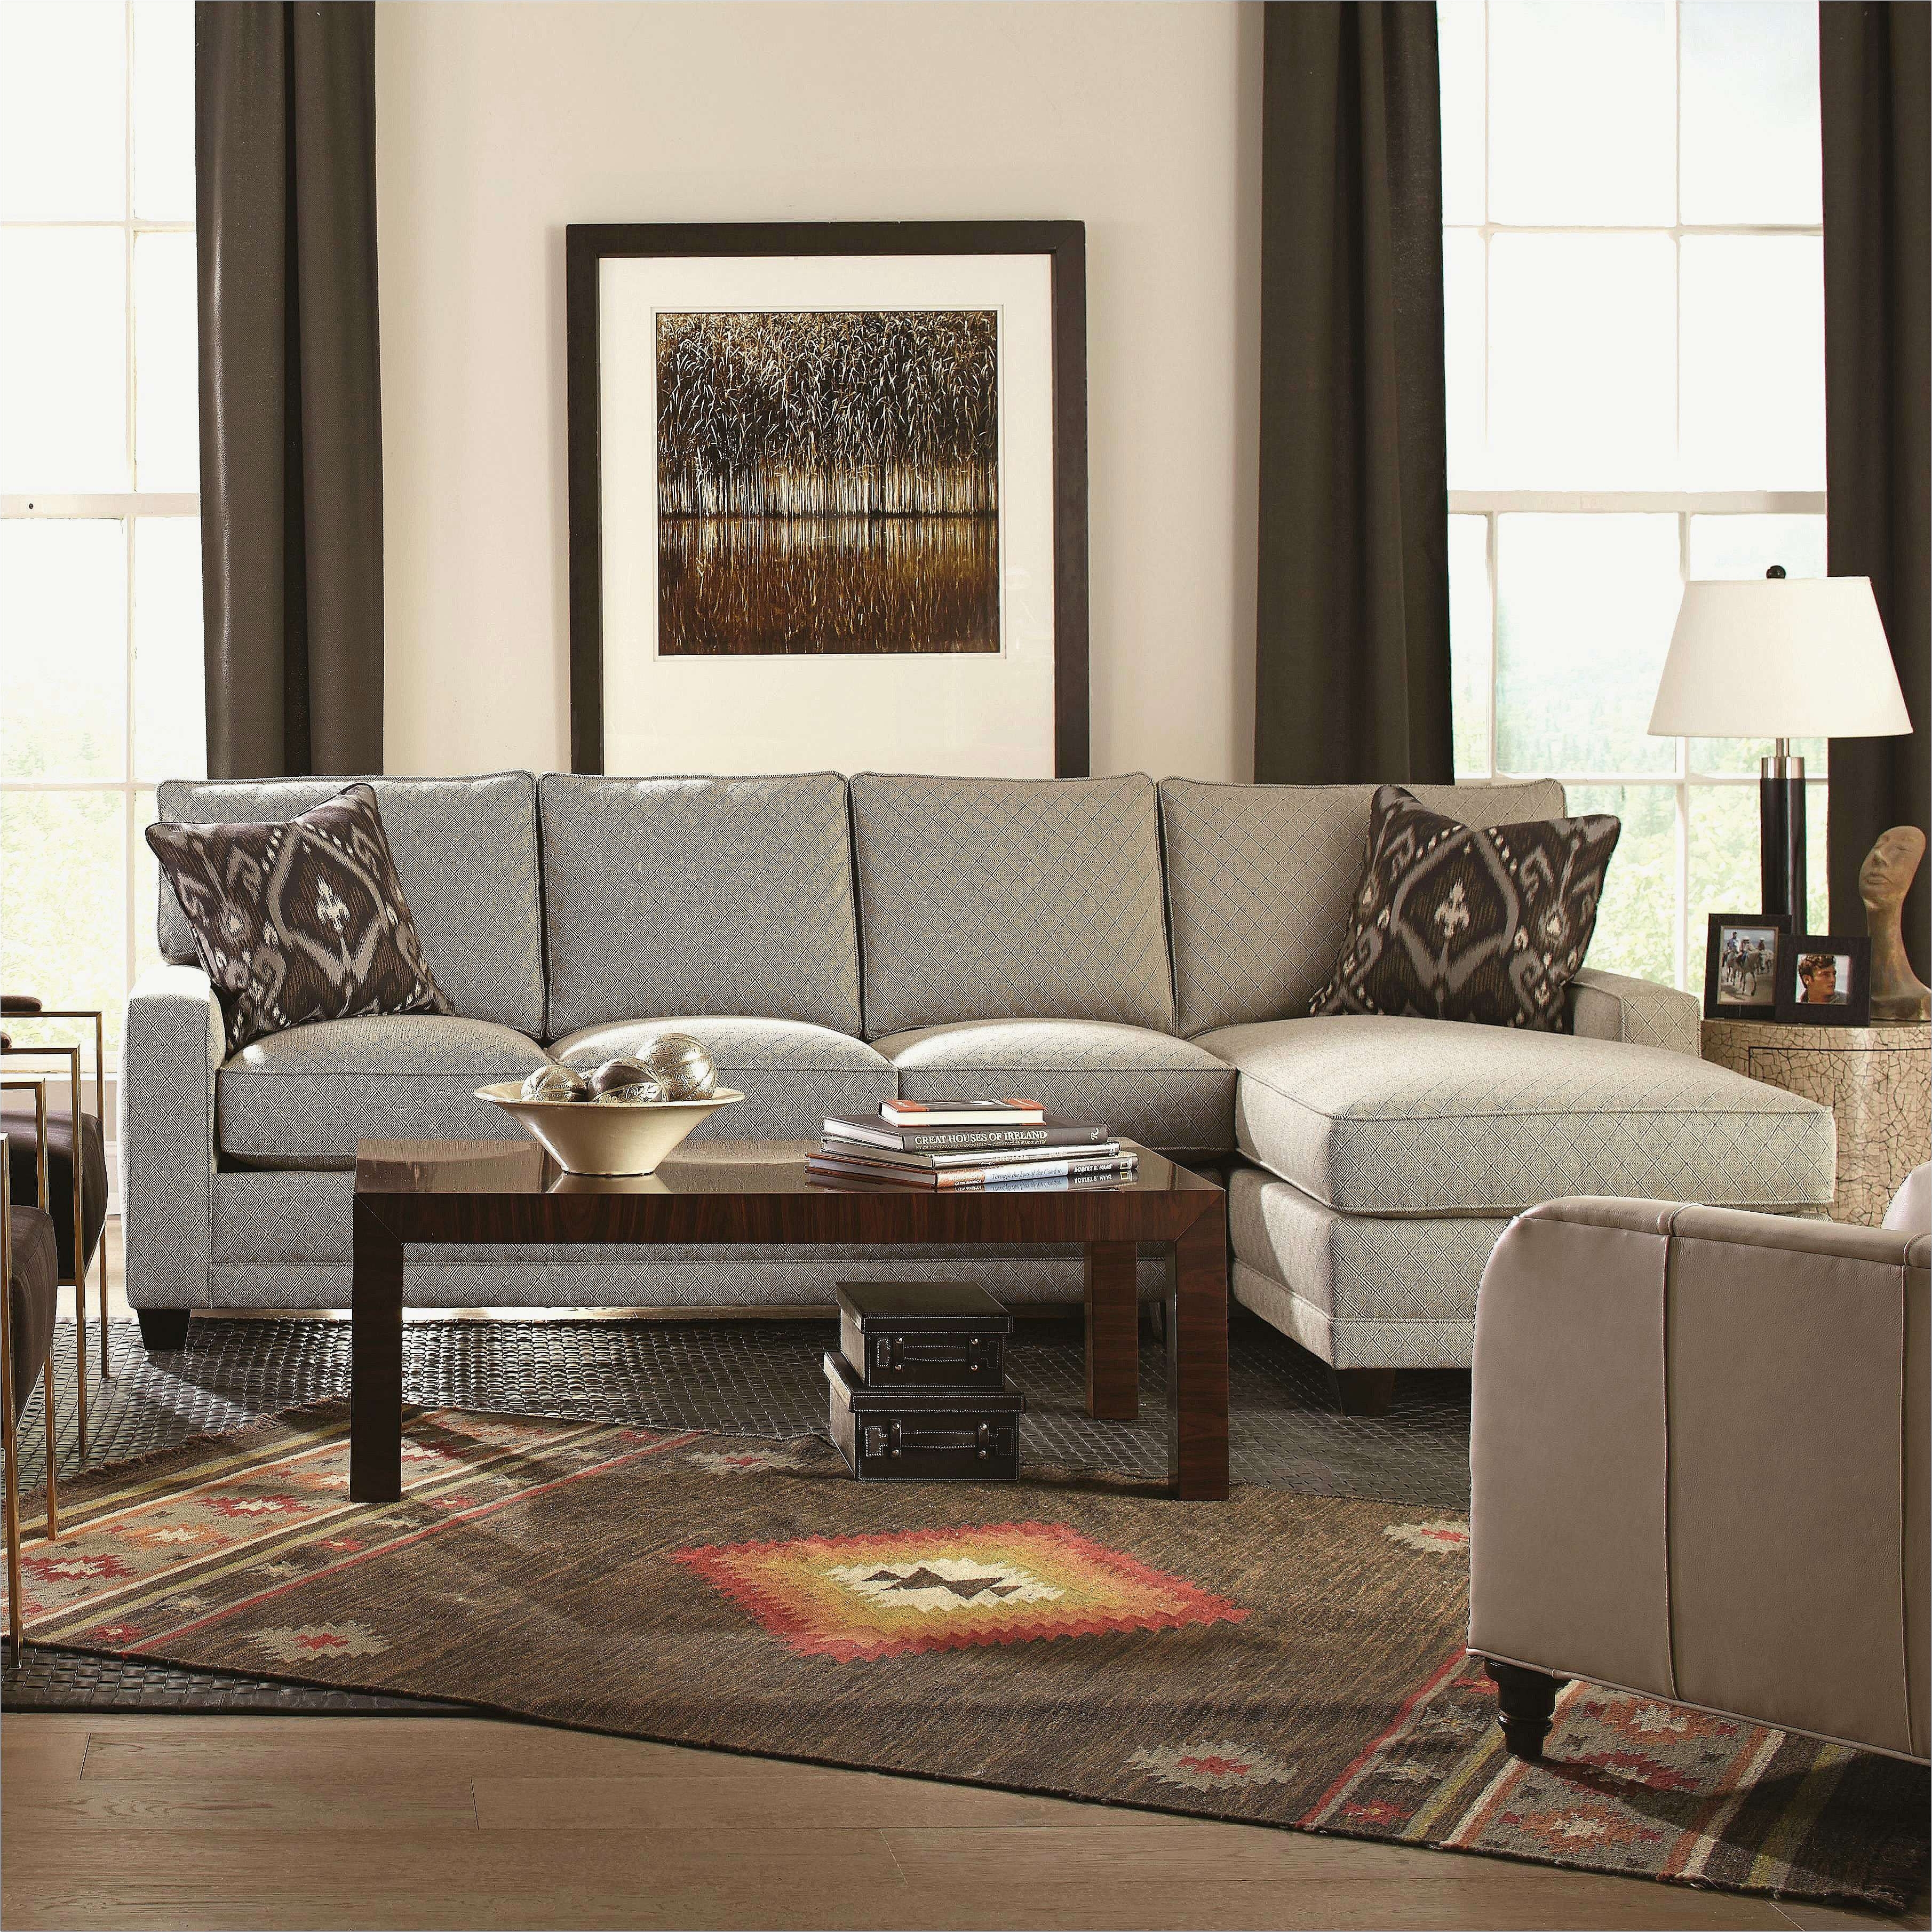 home decor furniture outlet inspirational modern furniture outlet pics of home decor furniture outlet inspirational modern